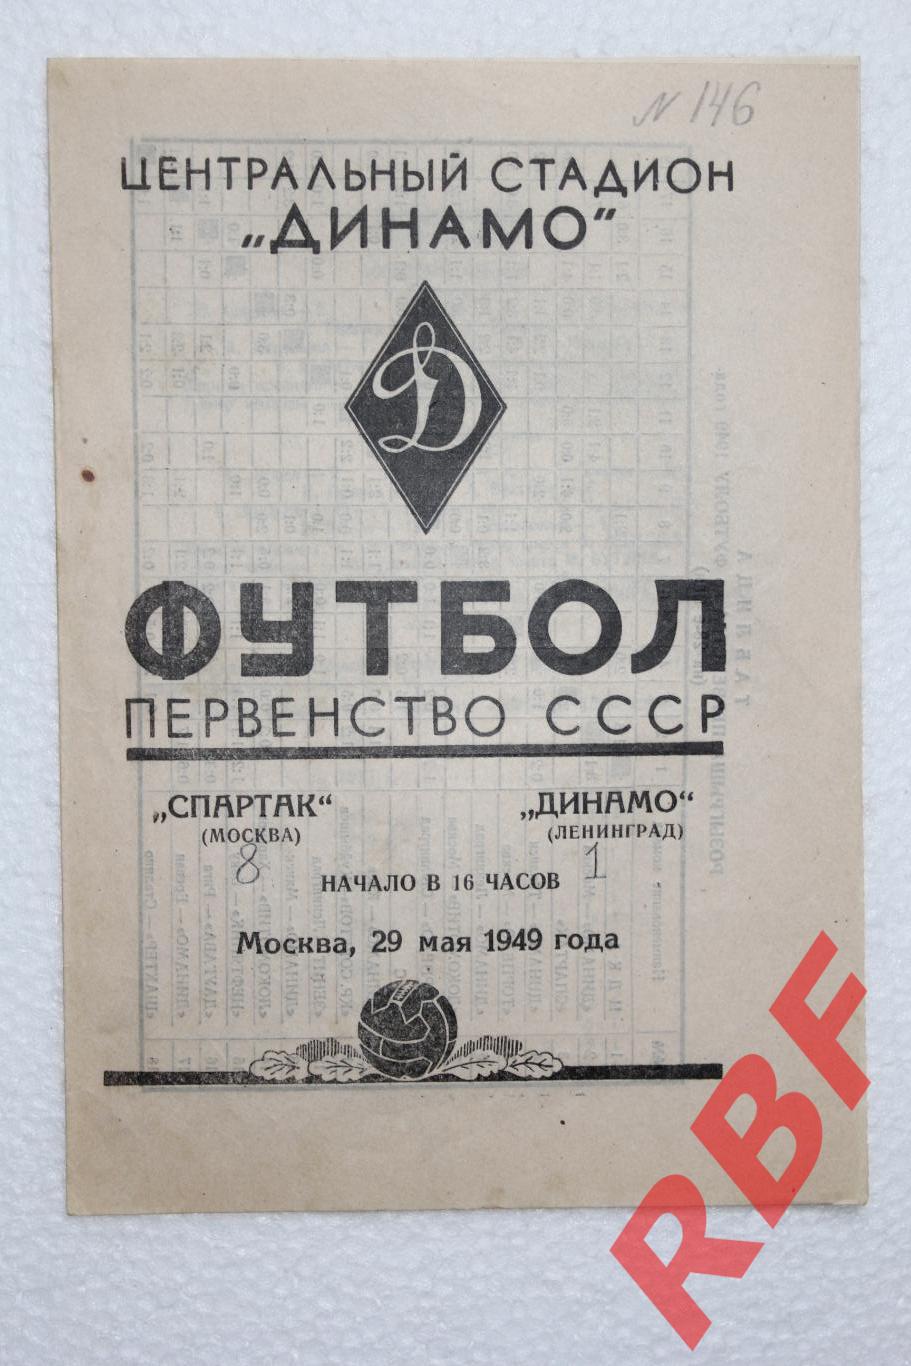 Спартак Москва - Динамо Ленинград,29 мая 1949